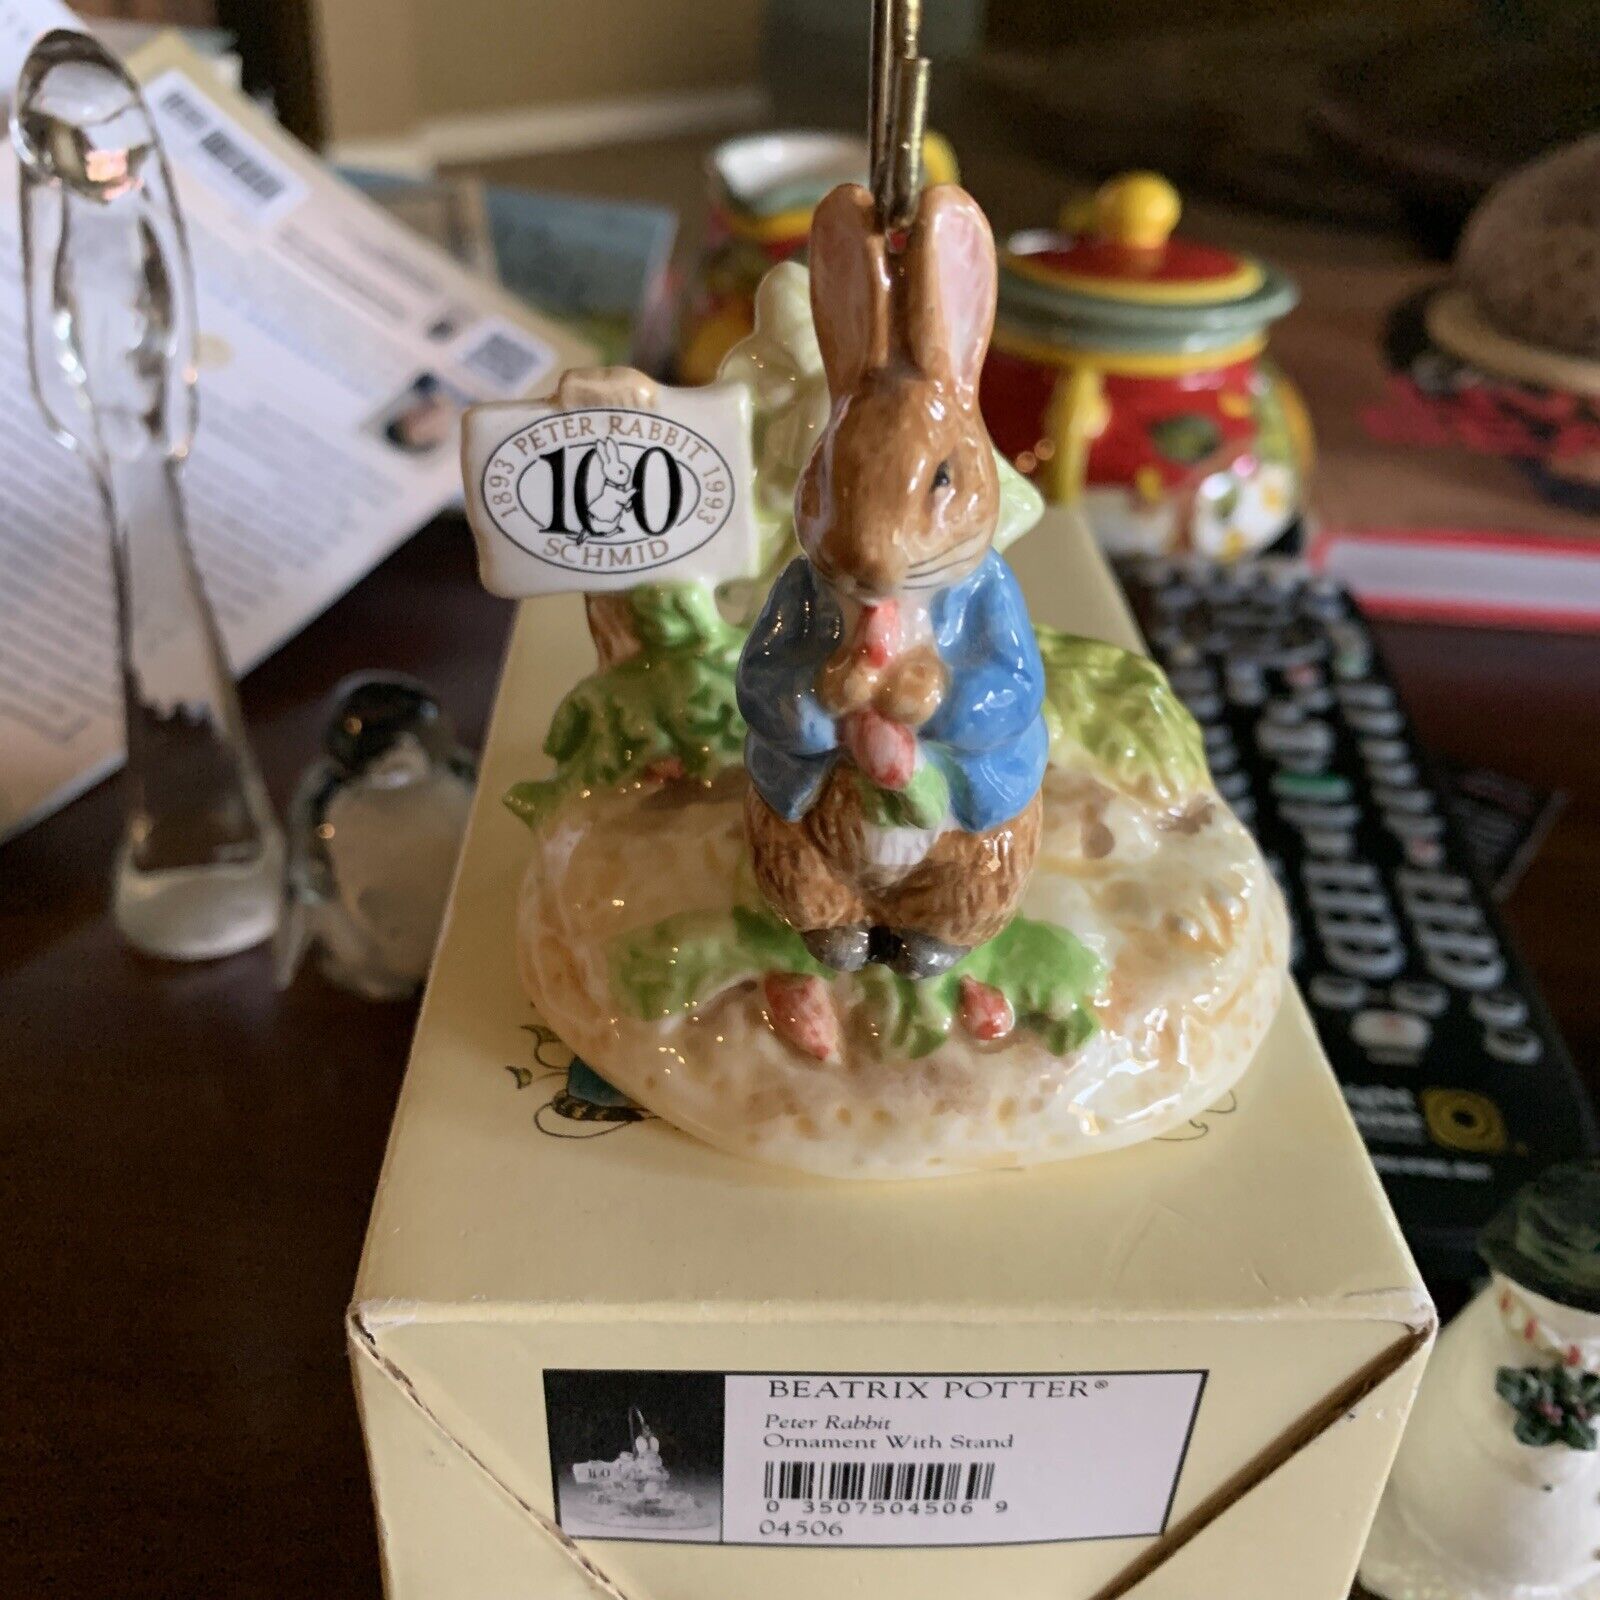 1993 Beatrix Potter Porcelain Peter Rabbit on Stand with Original Box by Schmid